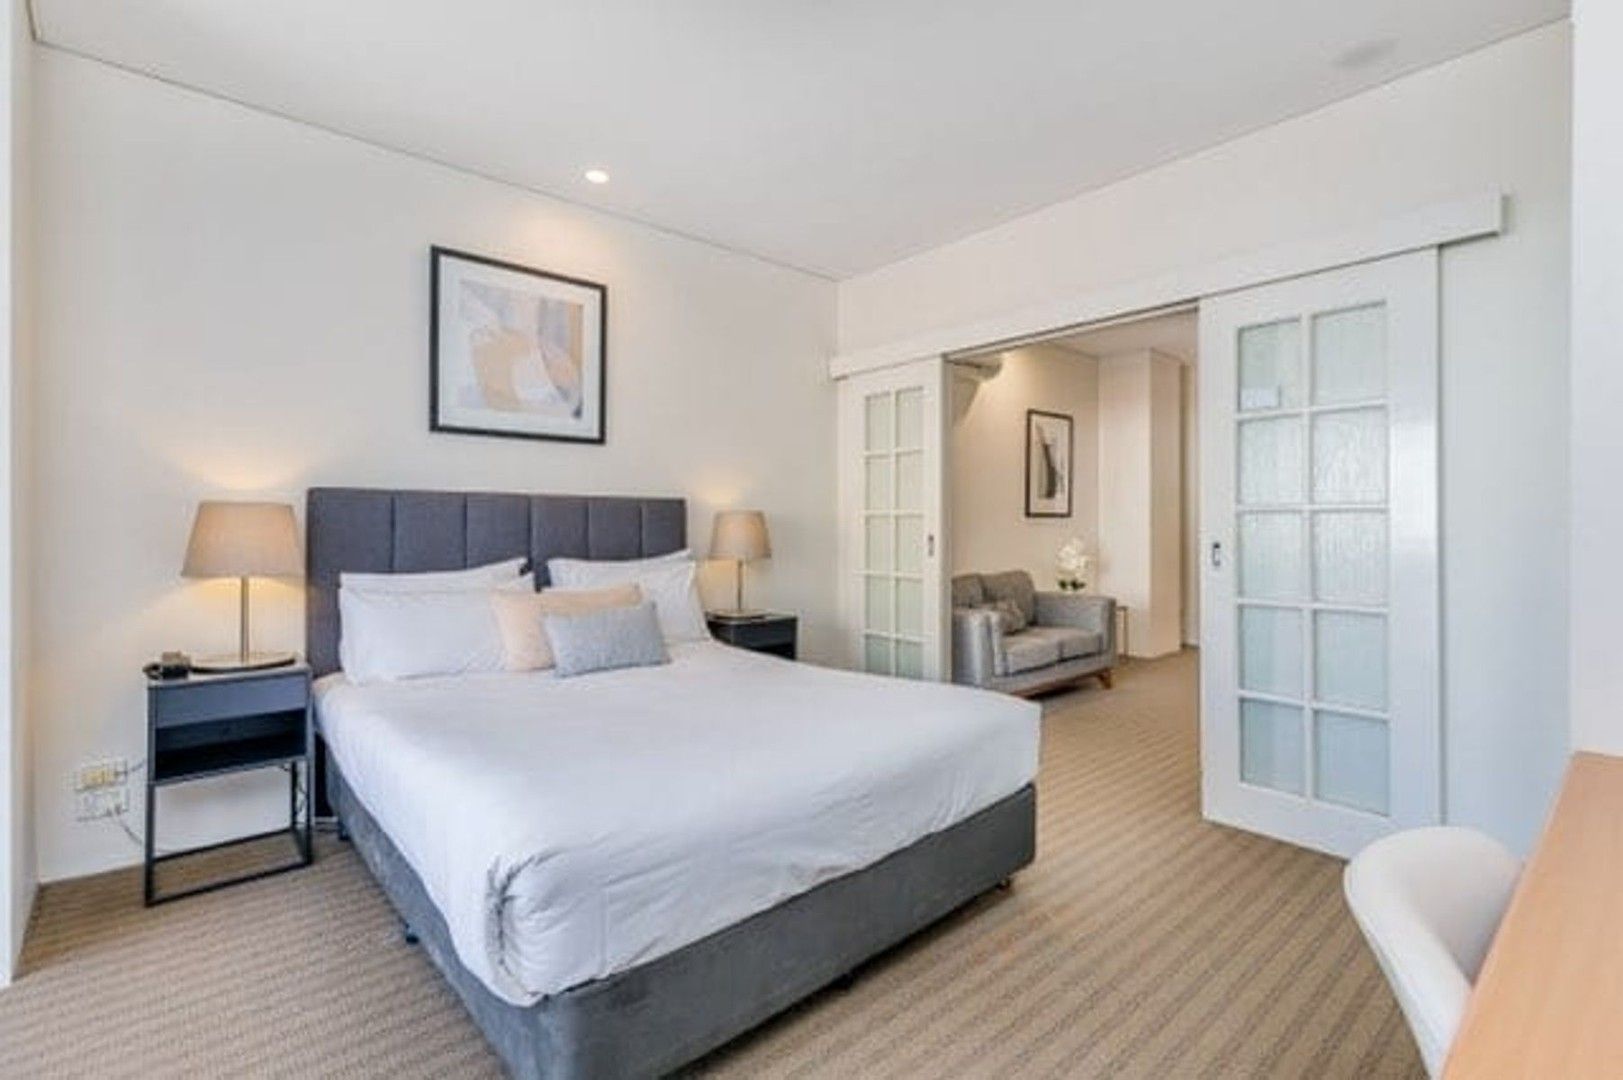 2 bedrooms Apartment / Unit / Flat in 12 Victoria Avenue PERTH WA, 6000